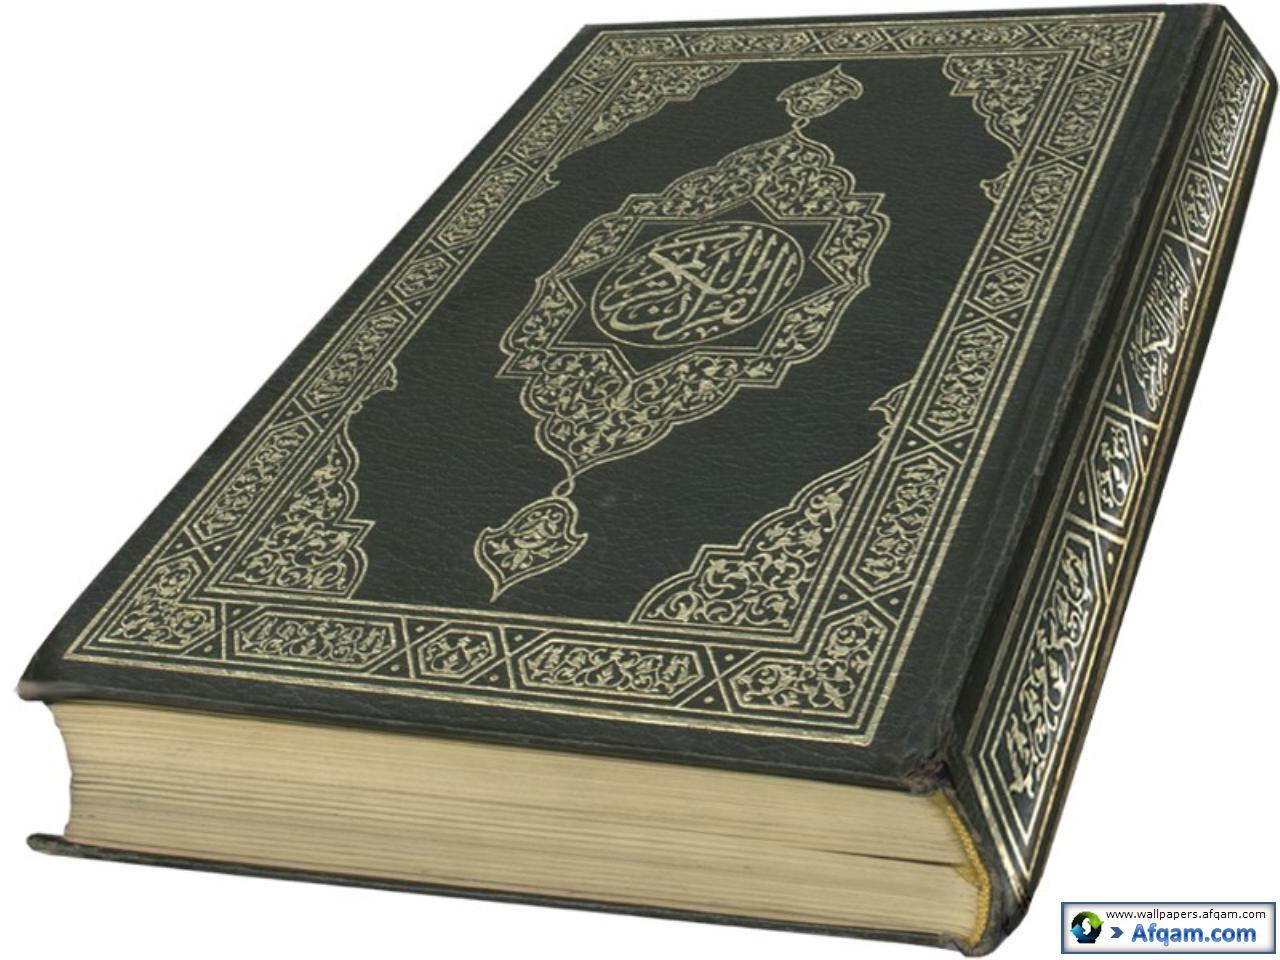 Quran clipart #3, Download drawings